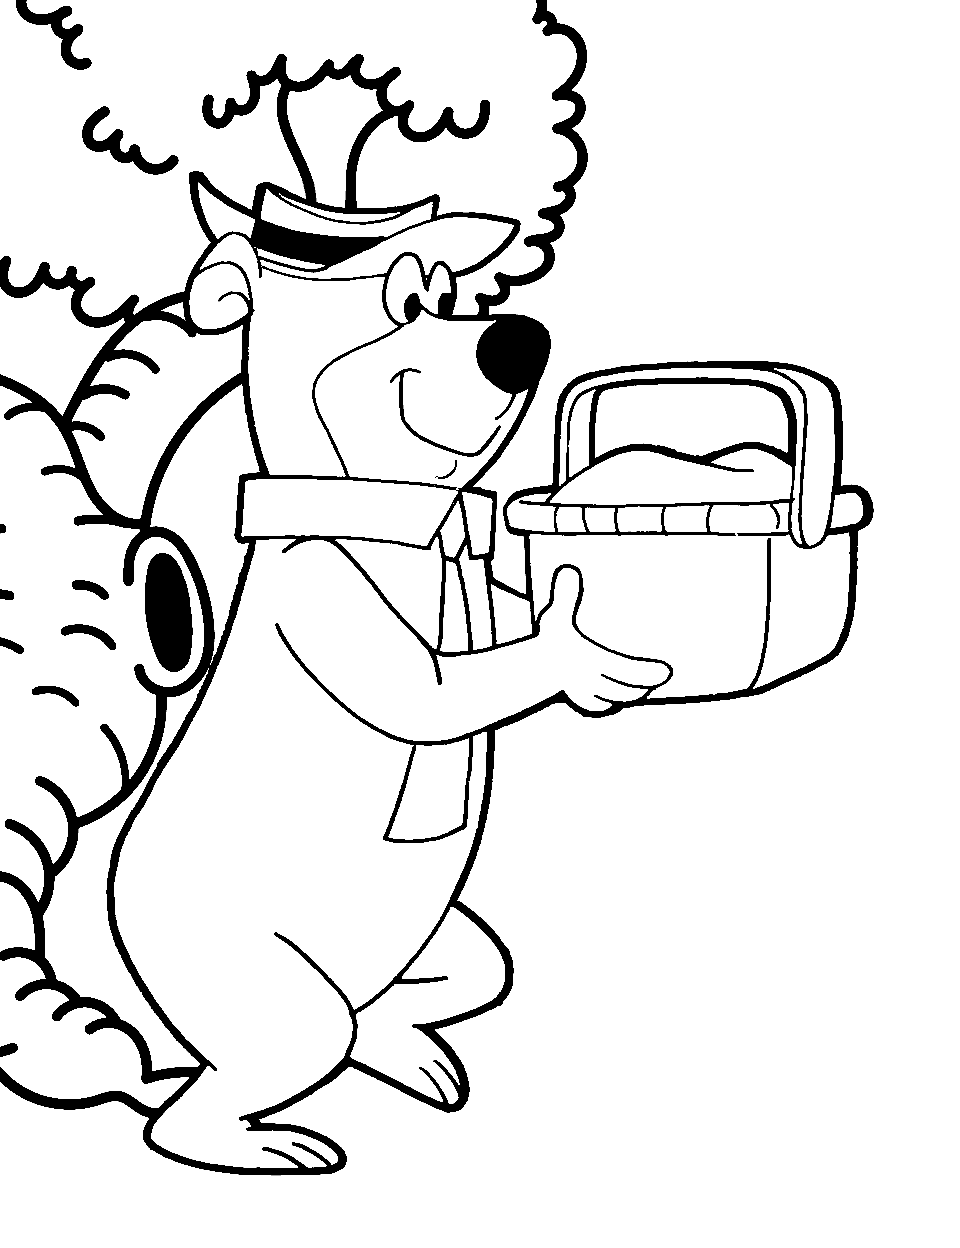 Yogi Bear's Picnic Theft Coloring Page - Yogi Bear sneaking away with a picnic basket full of treats.